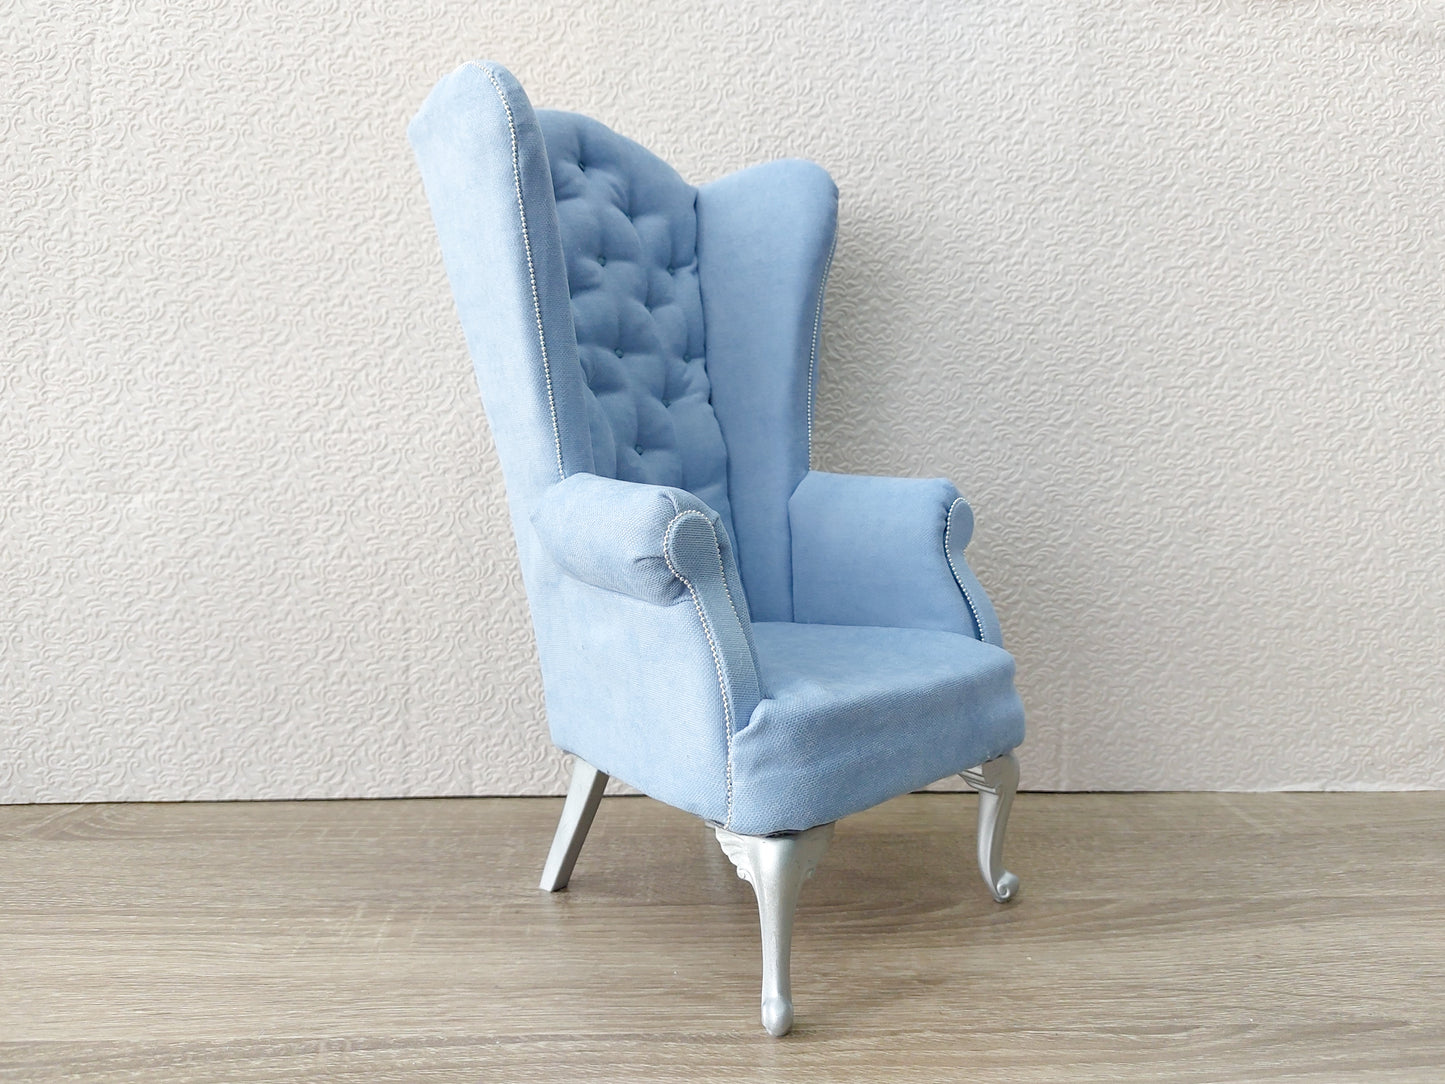 Chesterfield queen chair, blue